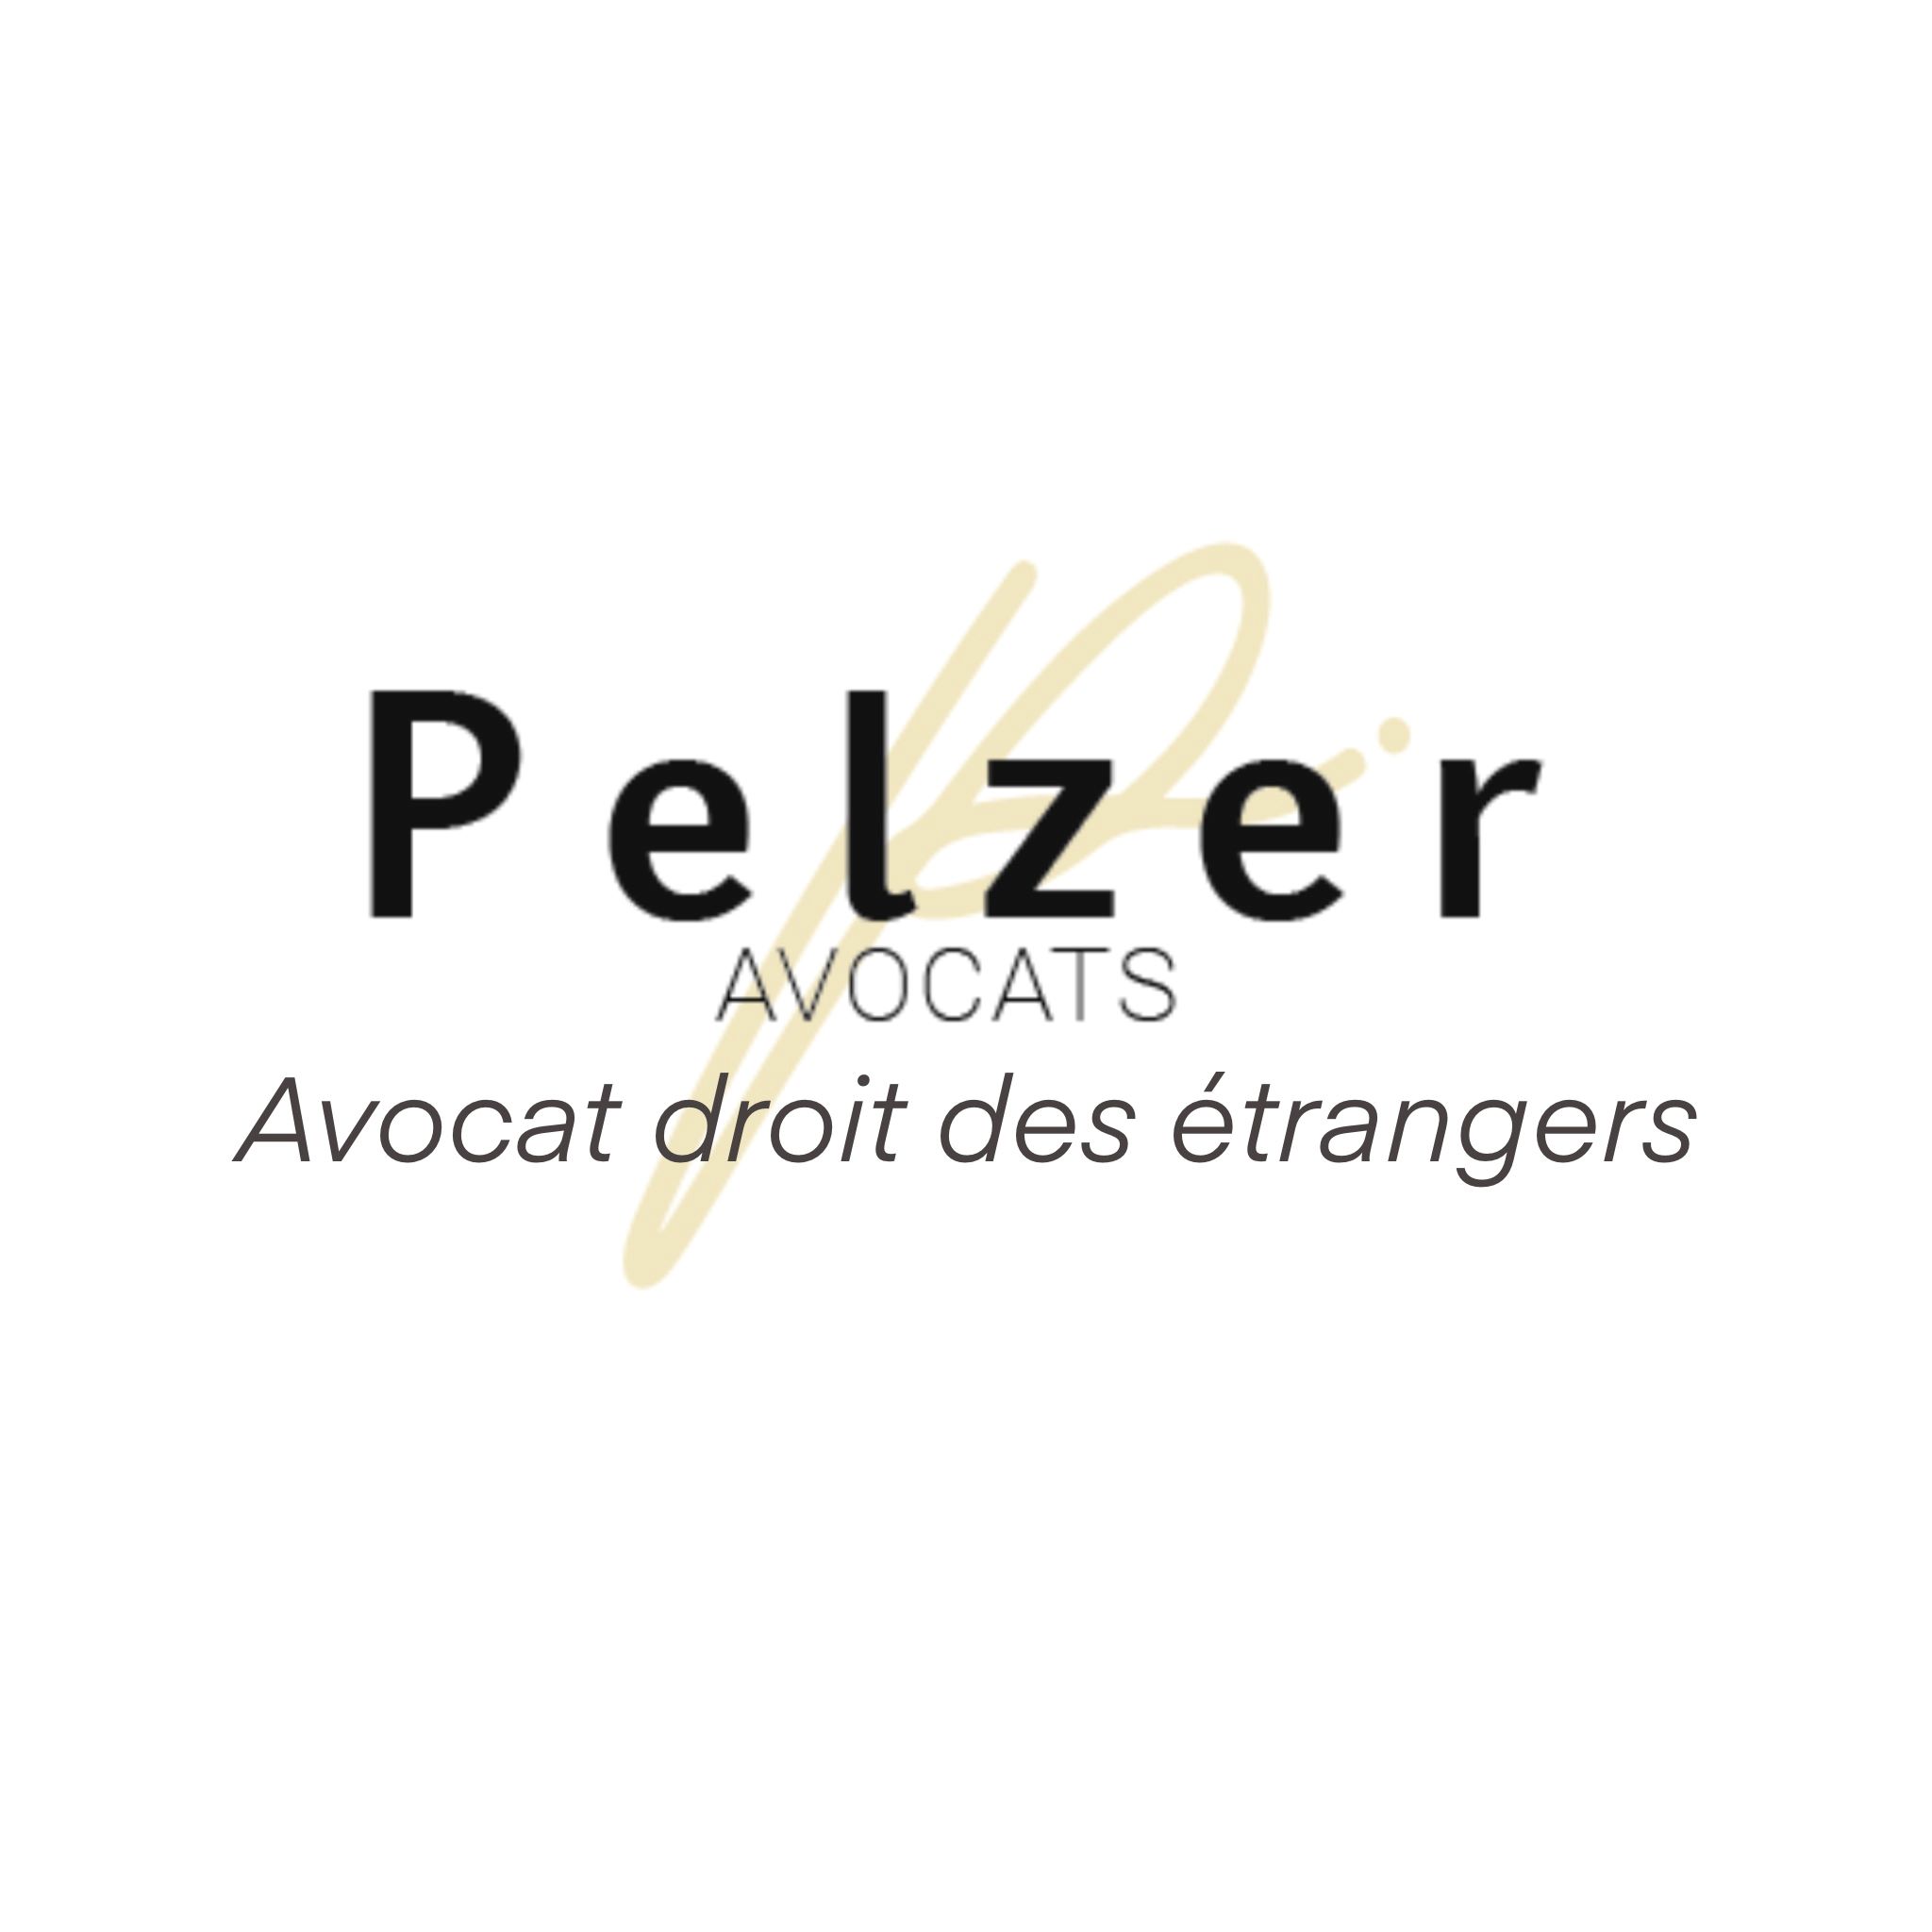 Contact Avocat Pelzer